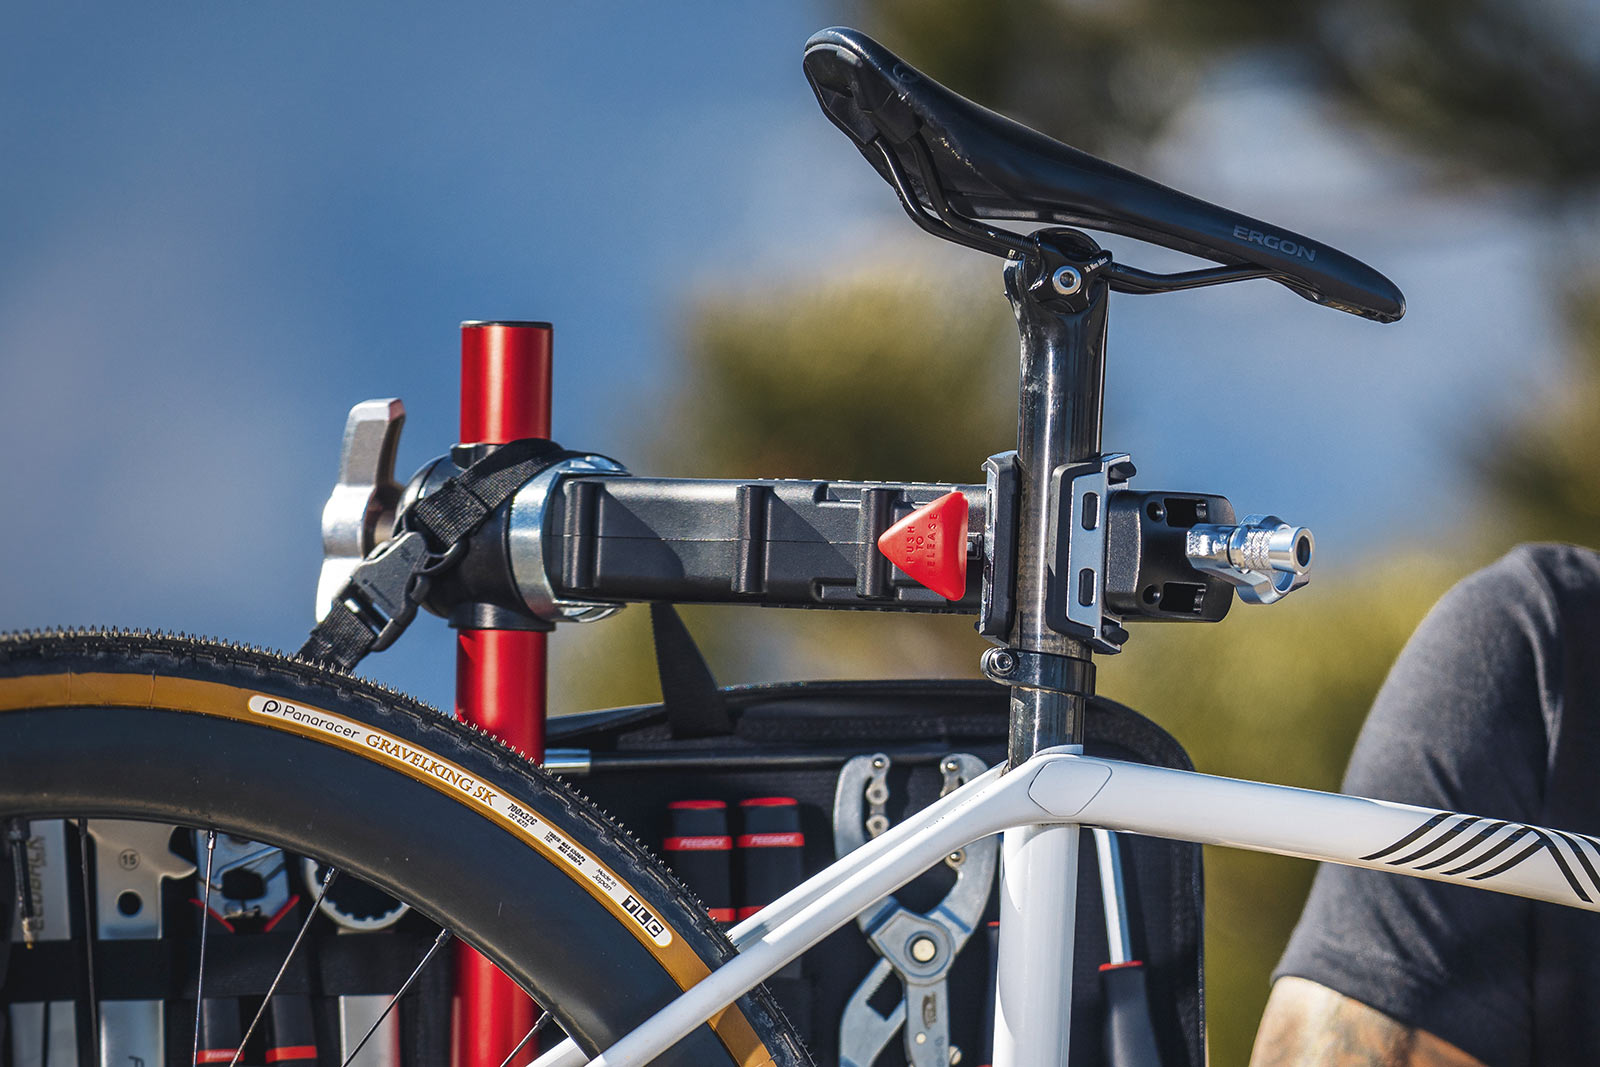 Feedback Upgrades, Renames Pro Mechanic Lightweight Mobile Bike Repair Stand  - Bikerumor